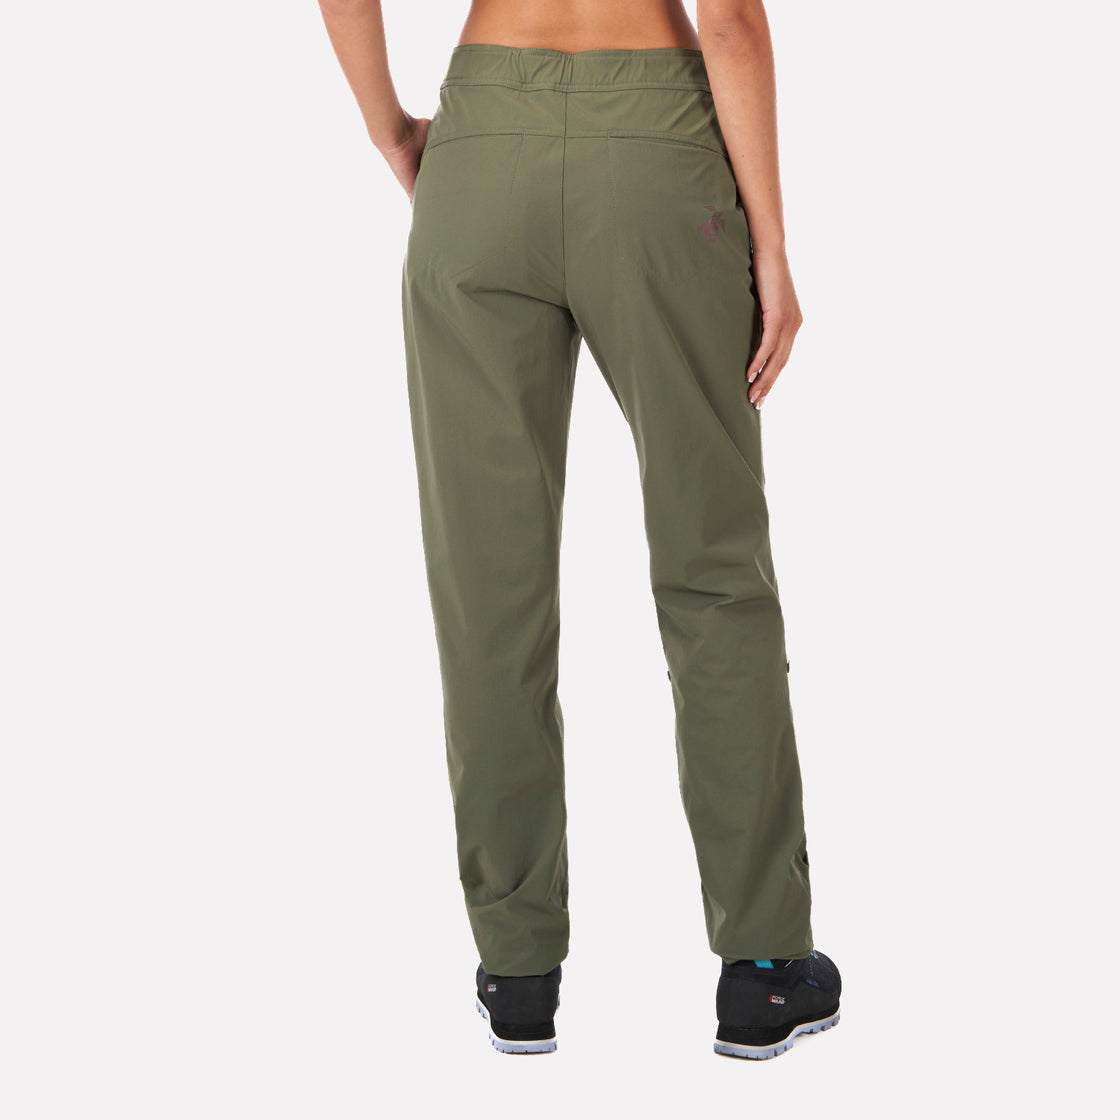 Pantalon Mujer Montatelo Verde Militar Haka Honu